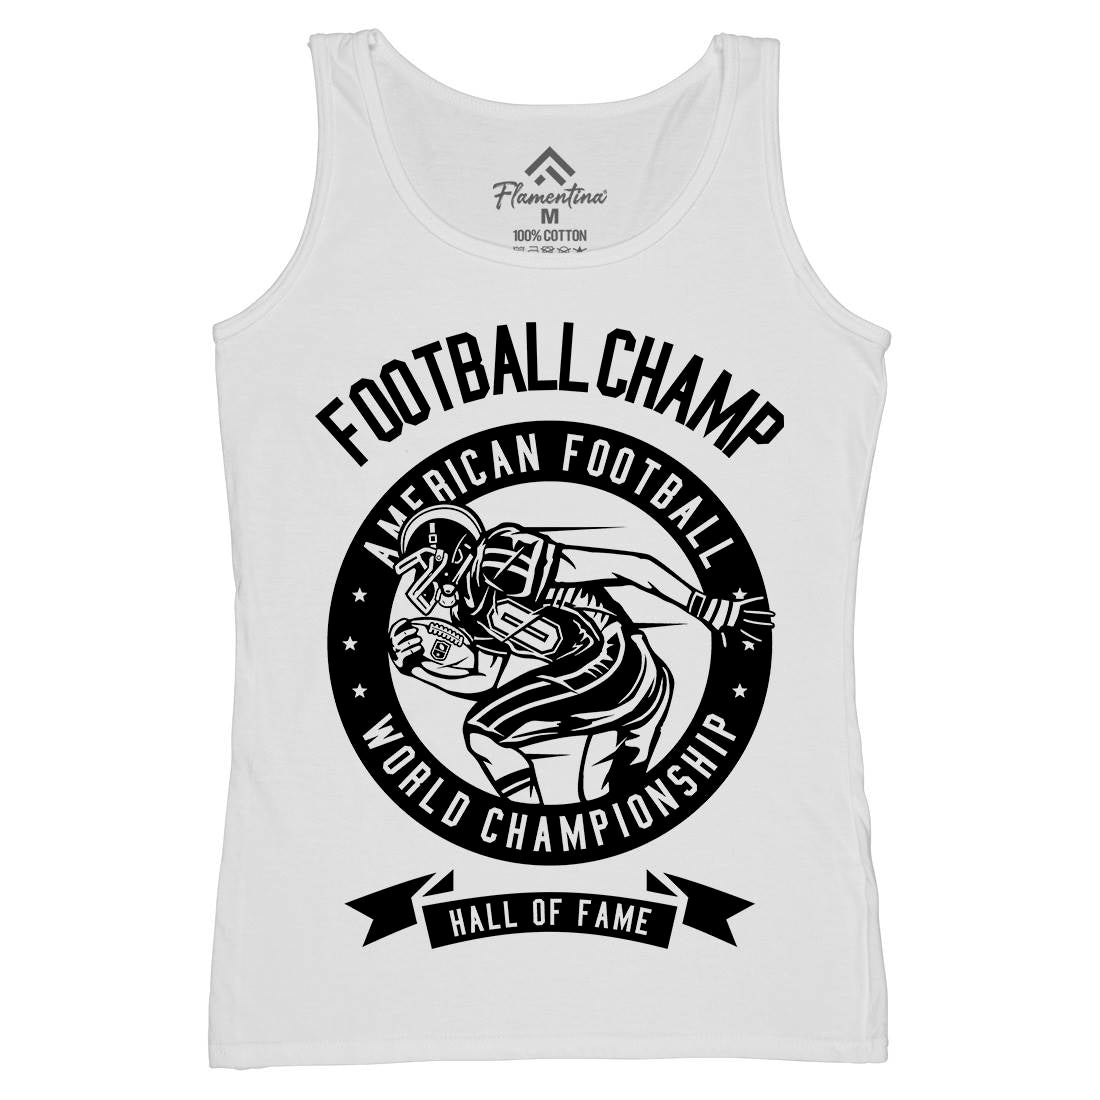 Football Champ Womens Organic Tank Top Vest Sport B541